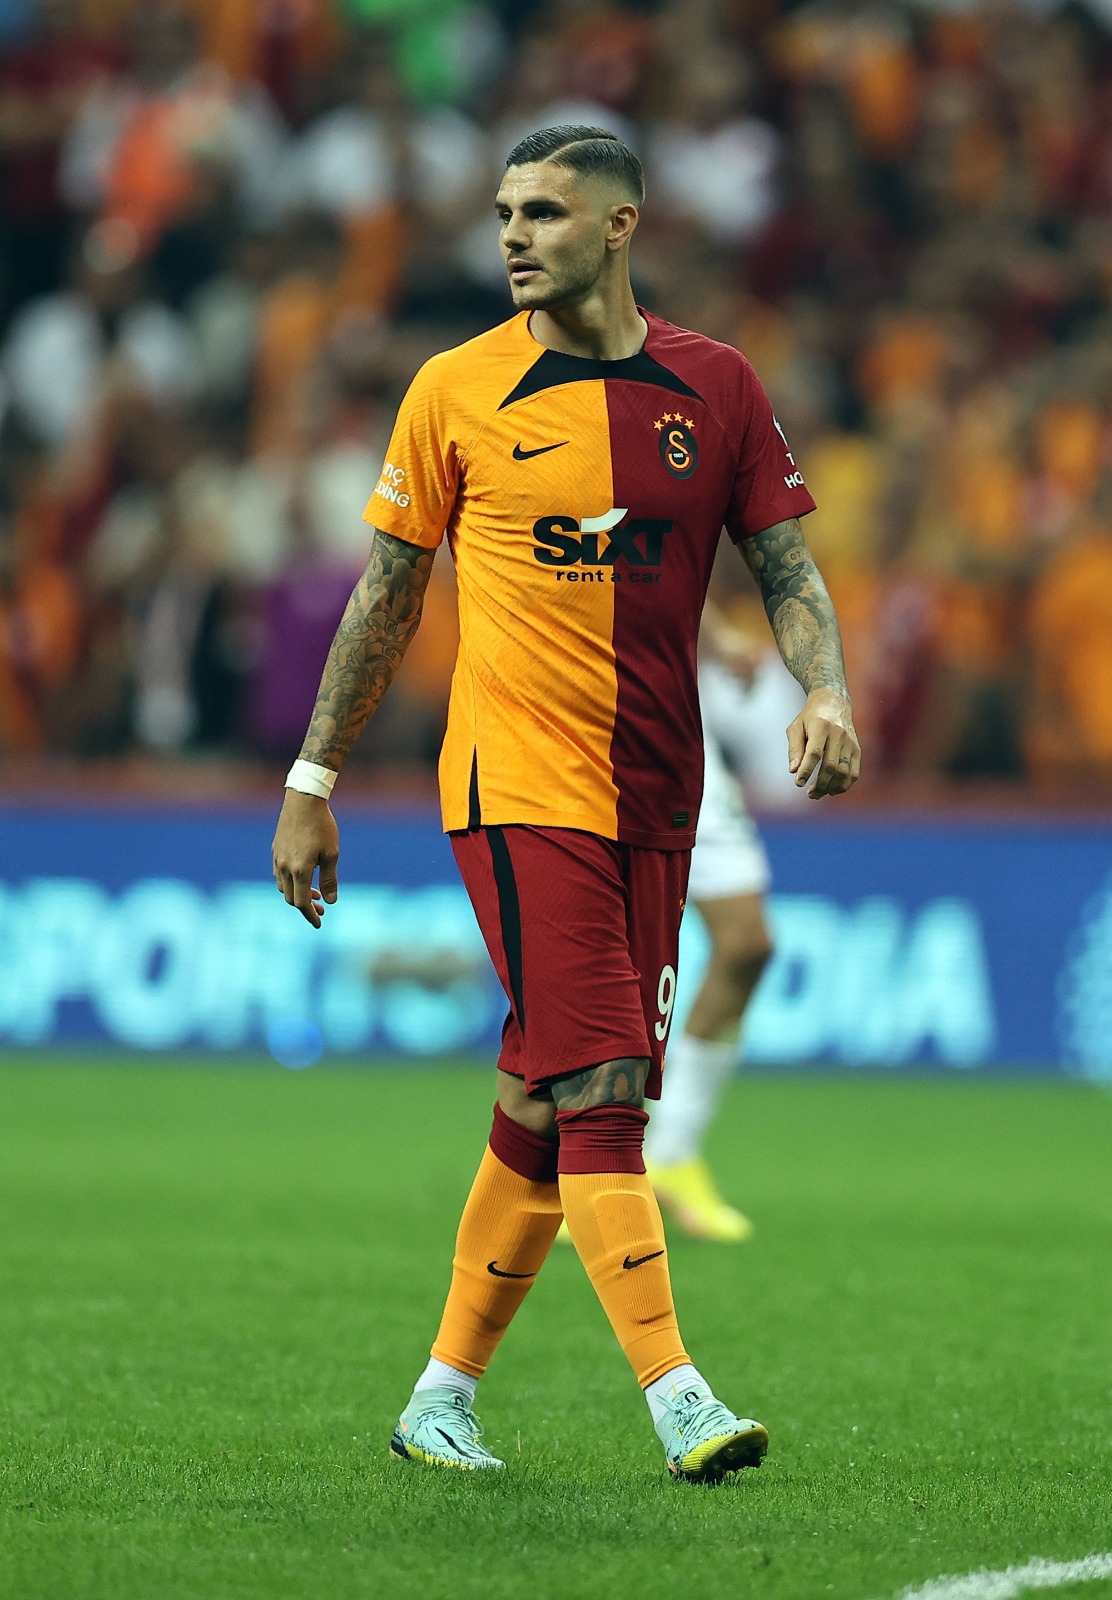 Galatasaray EN on X: A 𝒅𝒆𝒃𝒖𝒕 for 𝙈𝙖𝙪𝙧𝙤 𝙄𝙘𝙖𝙧𝙙𝙞